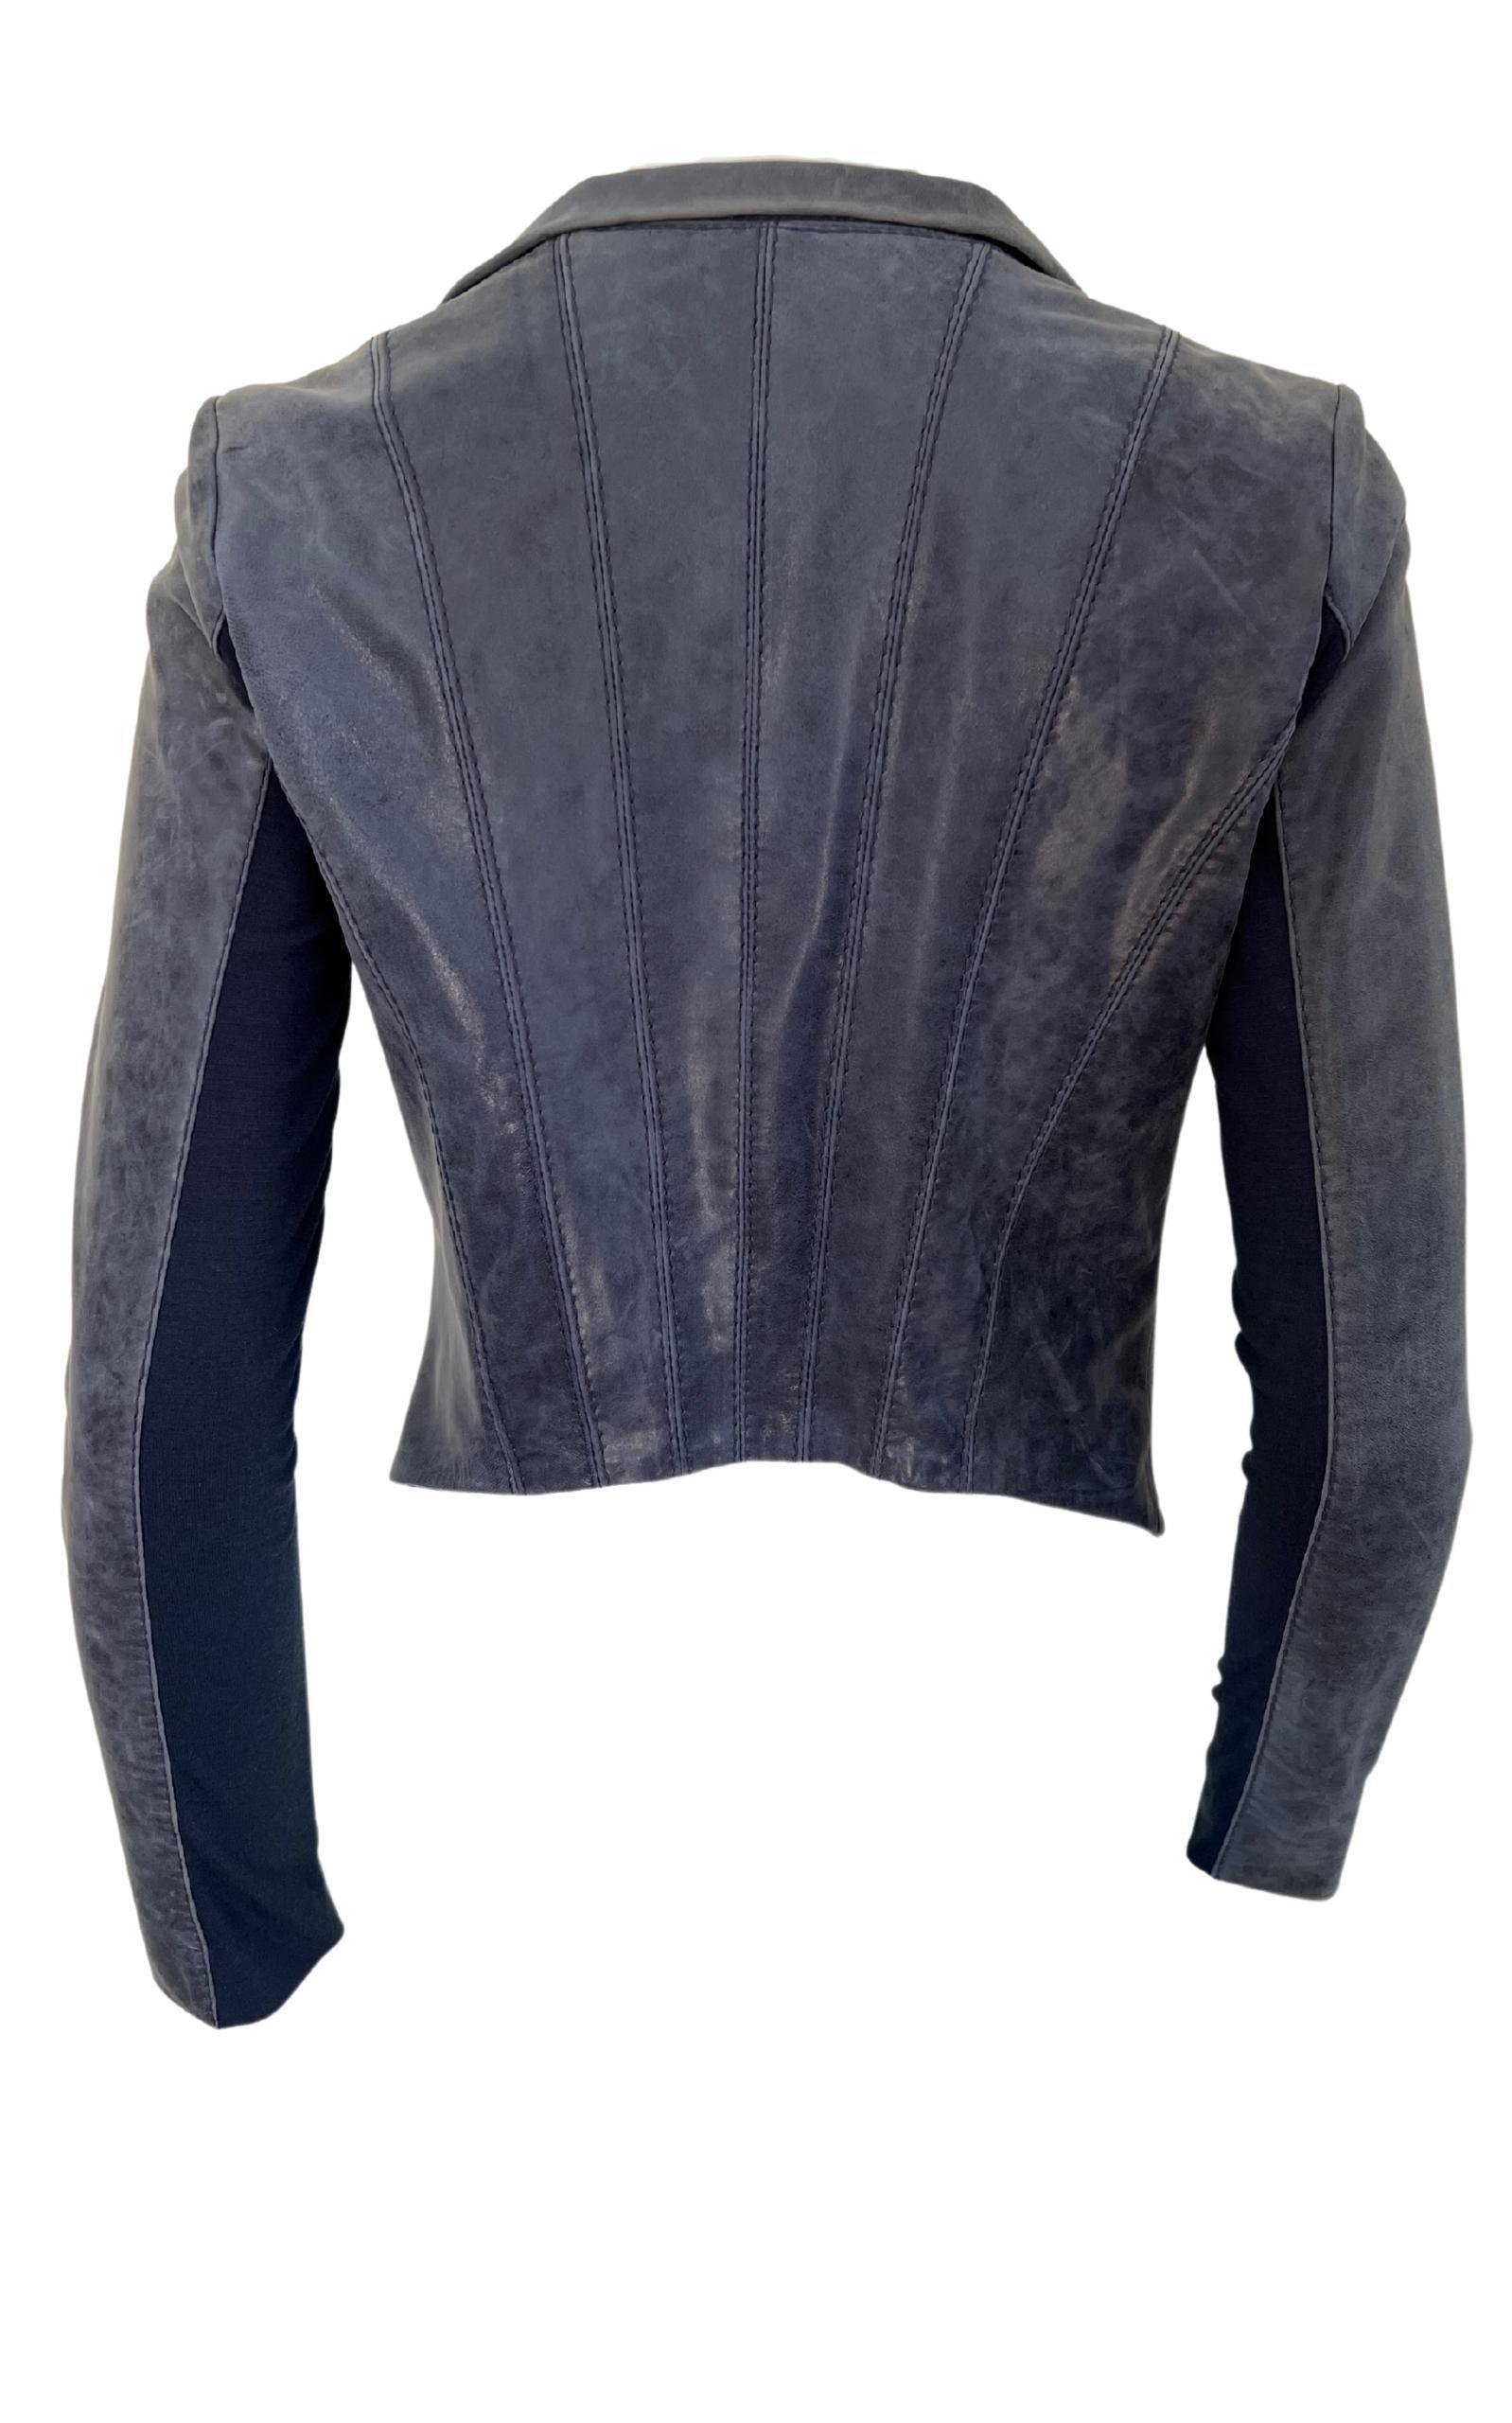  BCBGMAXAZRIAMoto Blue Leather Jacket - Runway Catalog